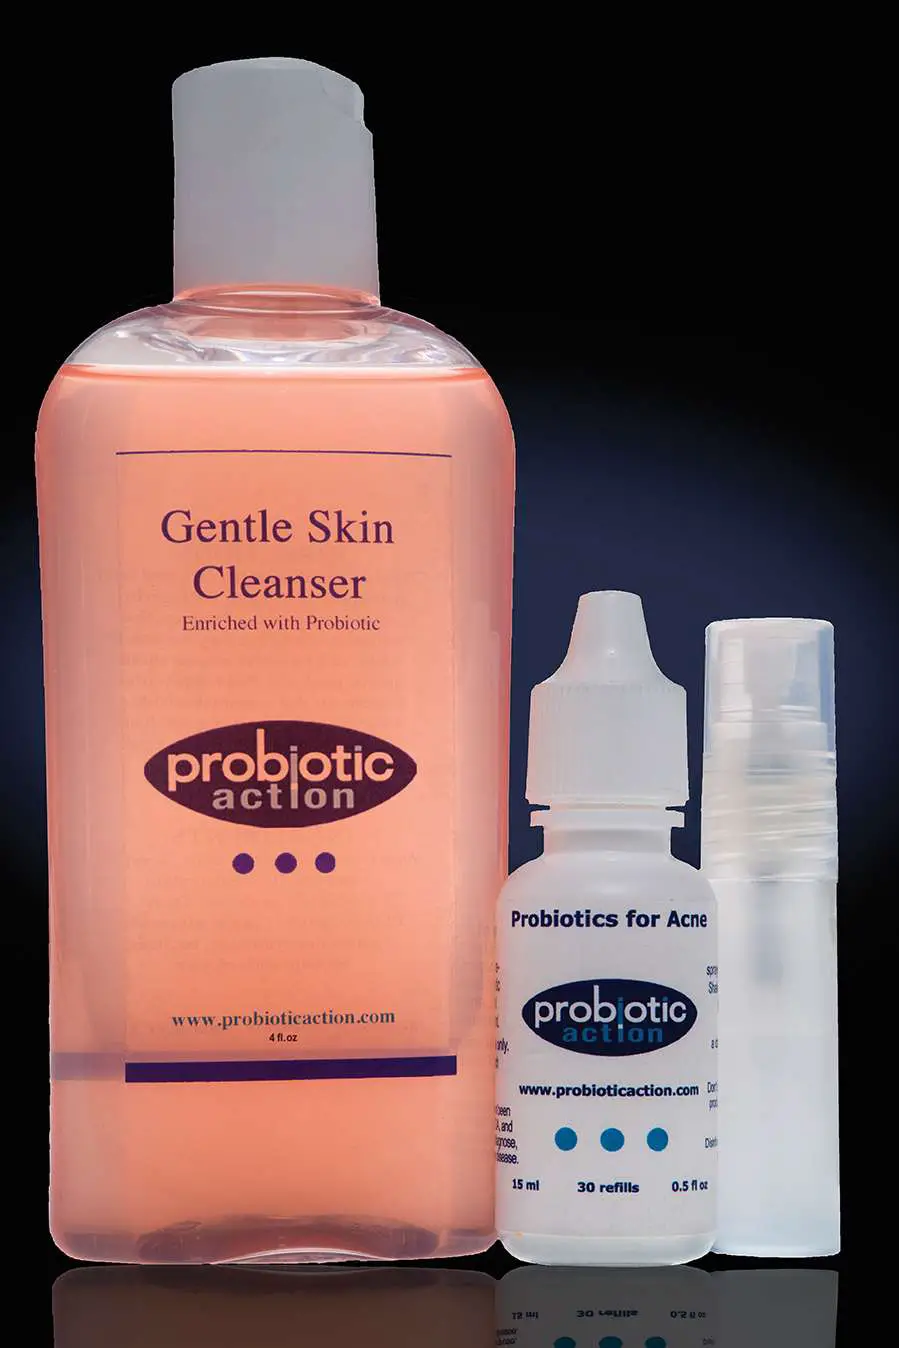 Adult Acne Treatment, Probiotic Action Announces Their ...